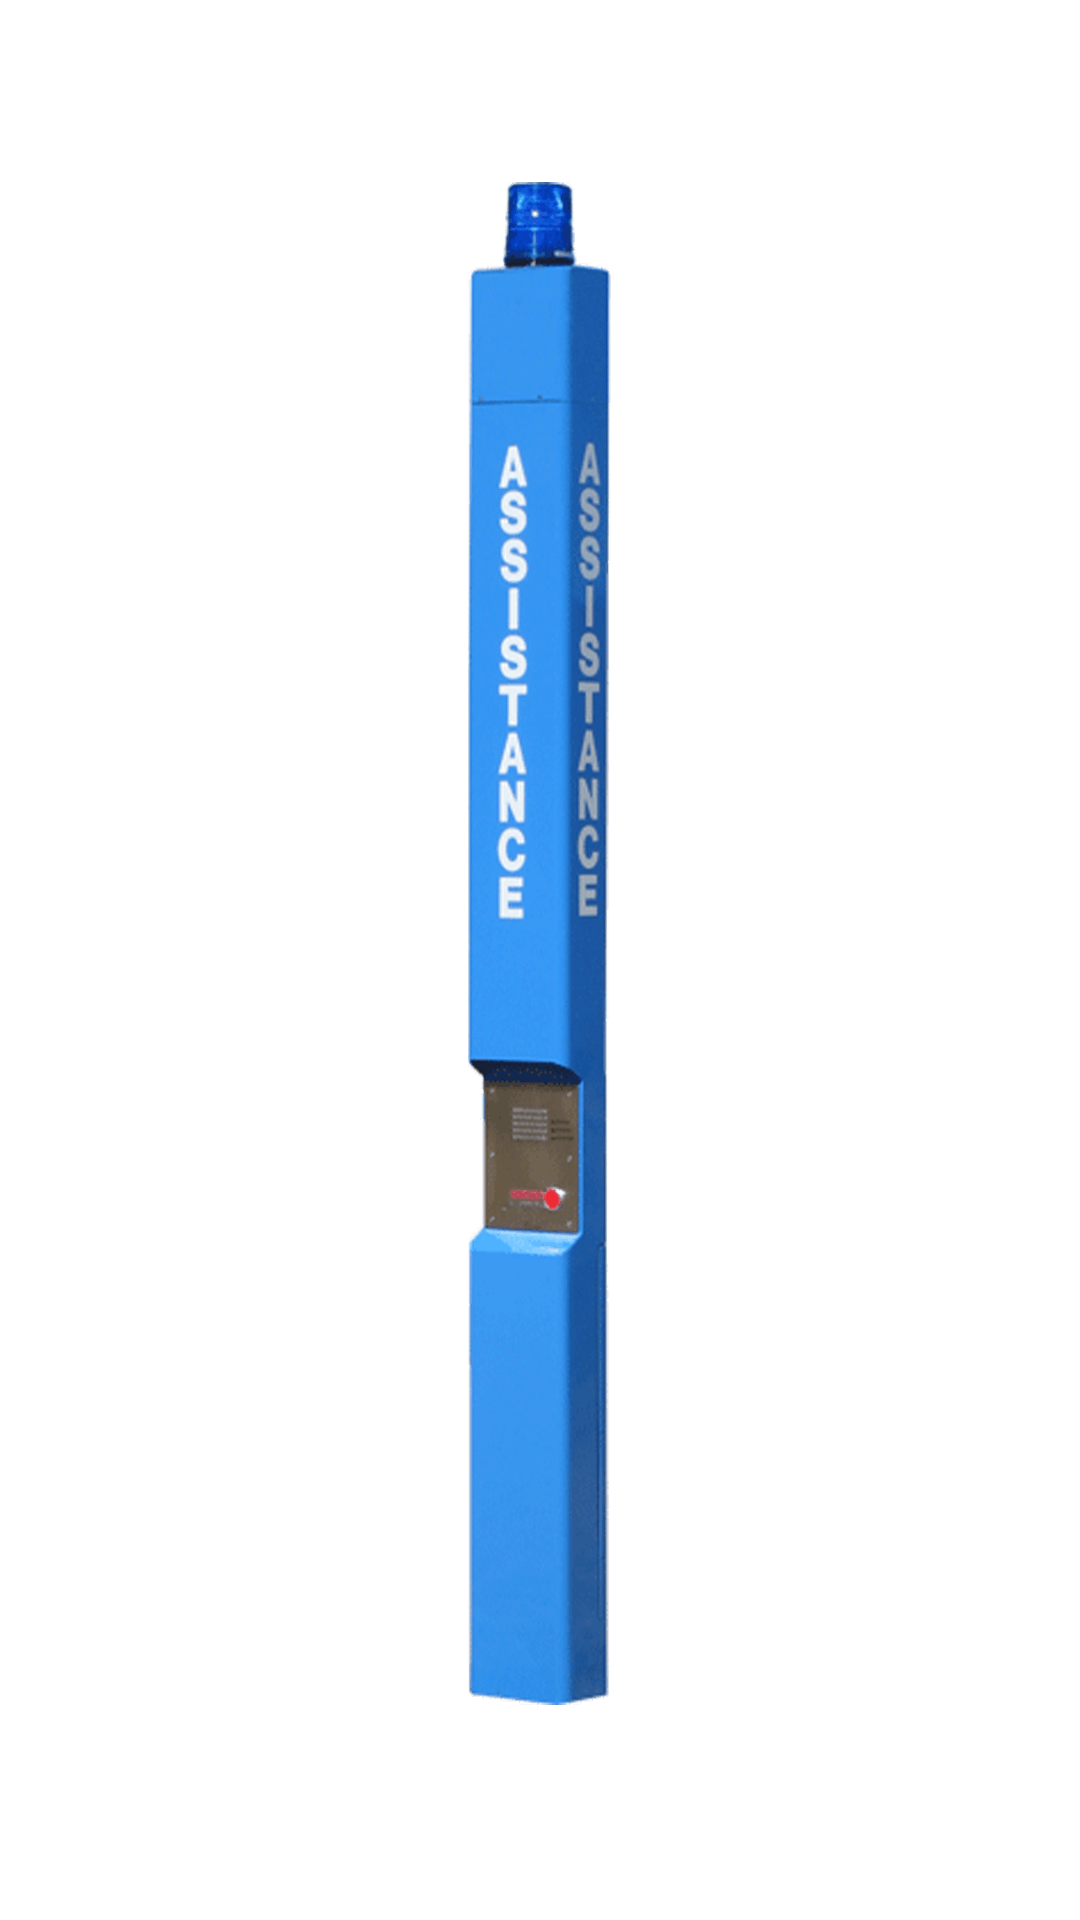 ECO TOWER™ - Aluminum Blue Light Phone Tower, Wireless Antenna Ready